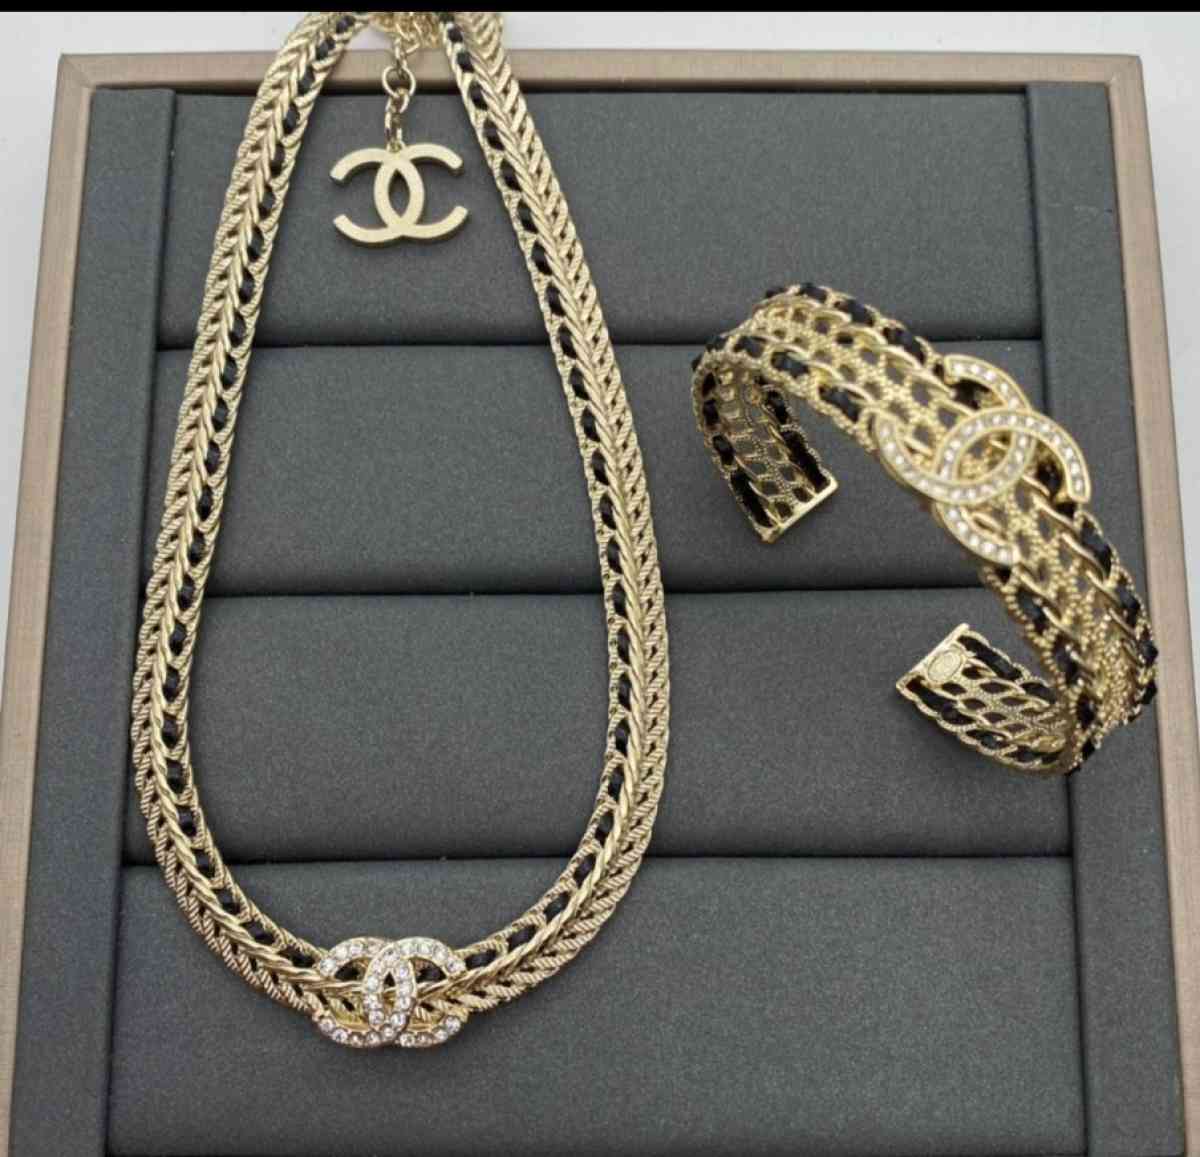 Chanel accessories